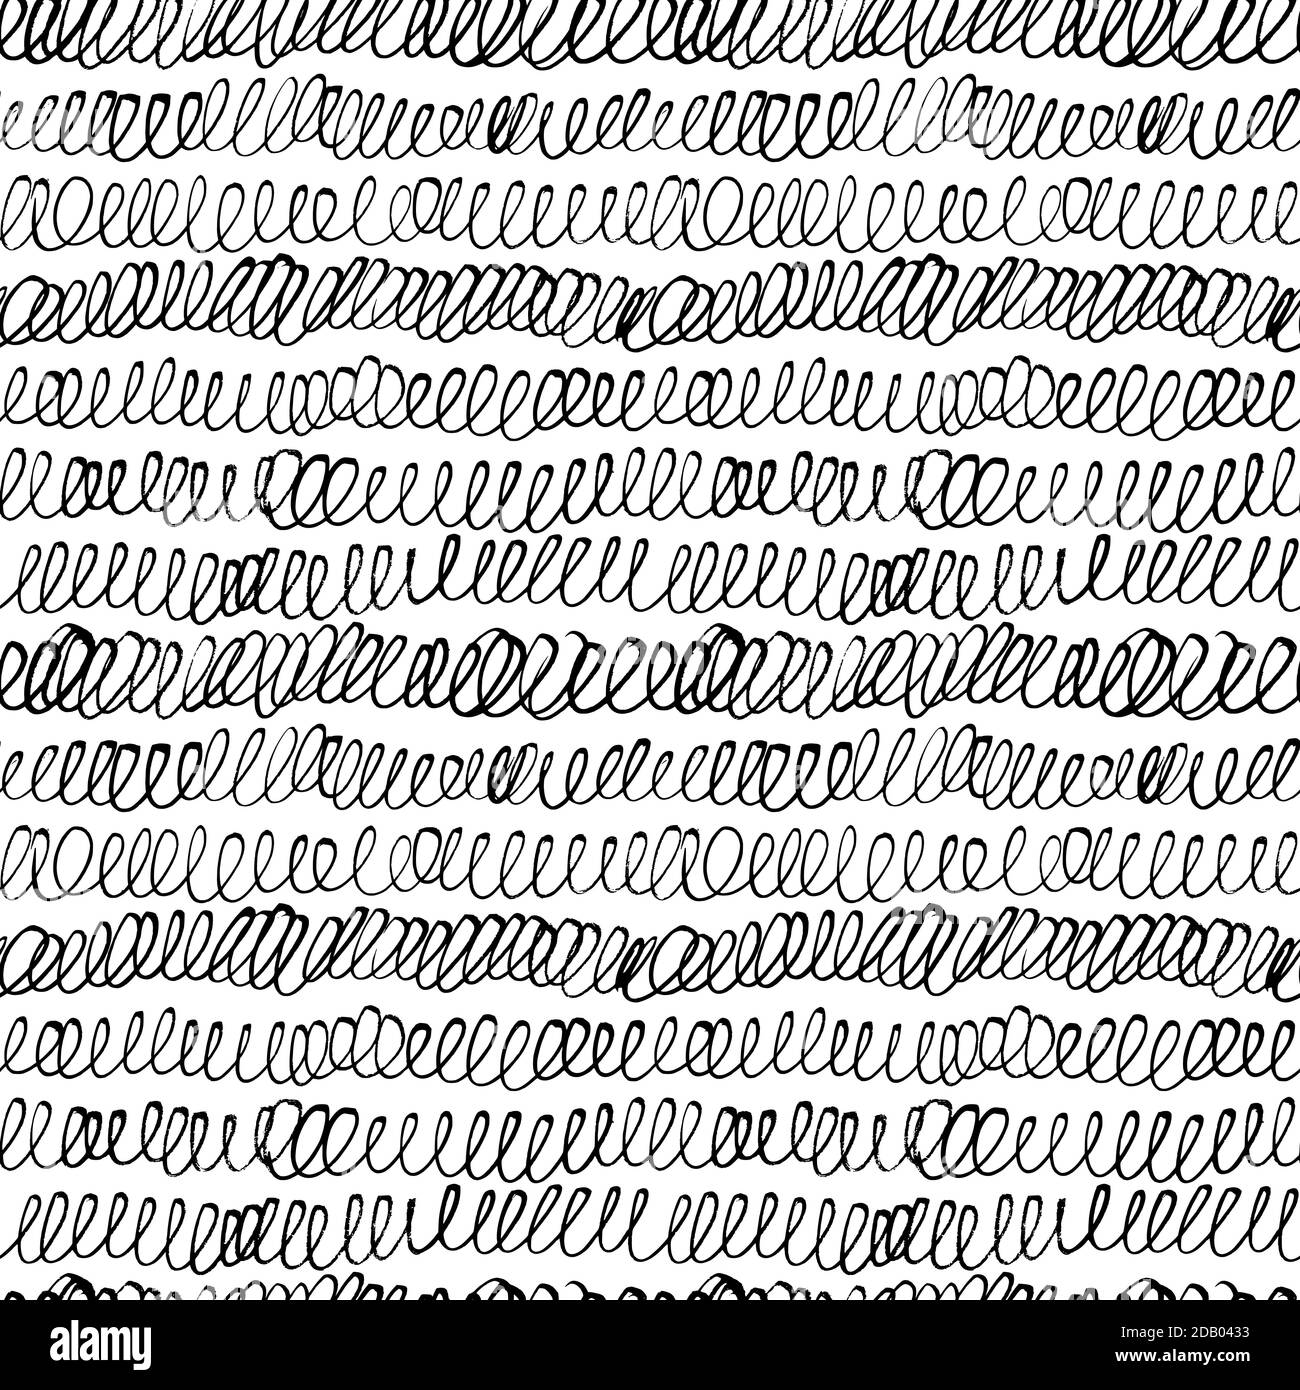 Schwarzes Doodle nahtloses Muster mit Looping Linien Stock Vektor